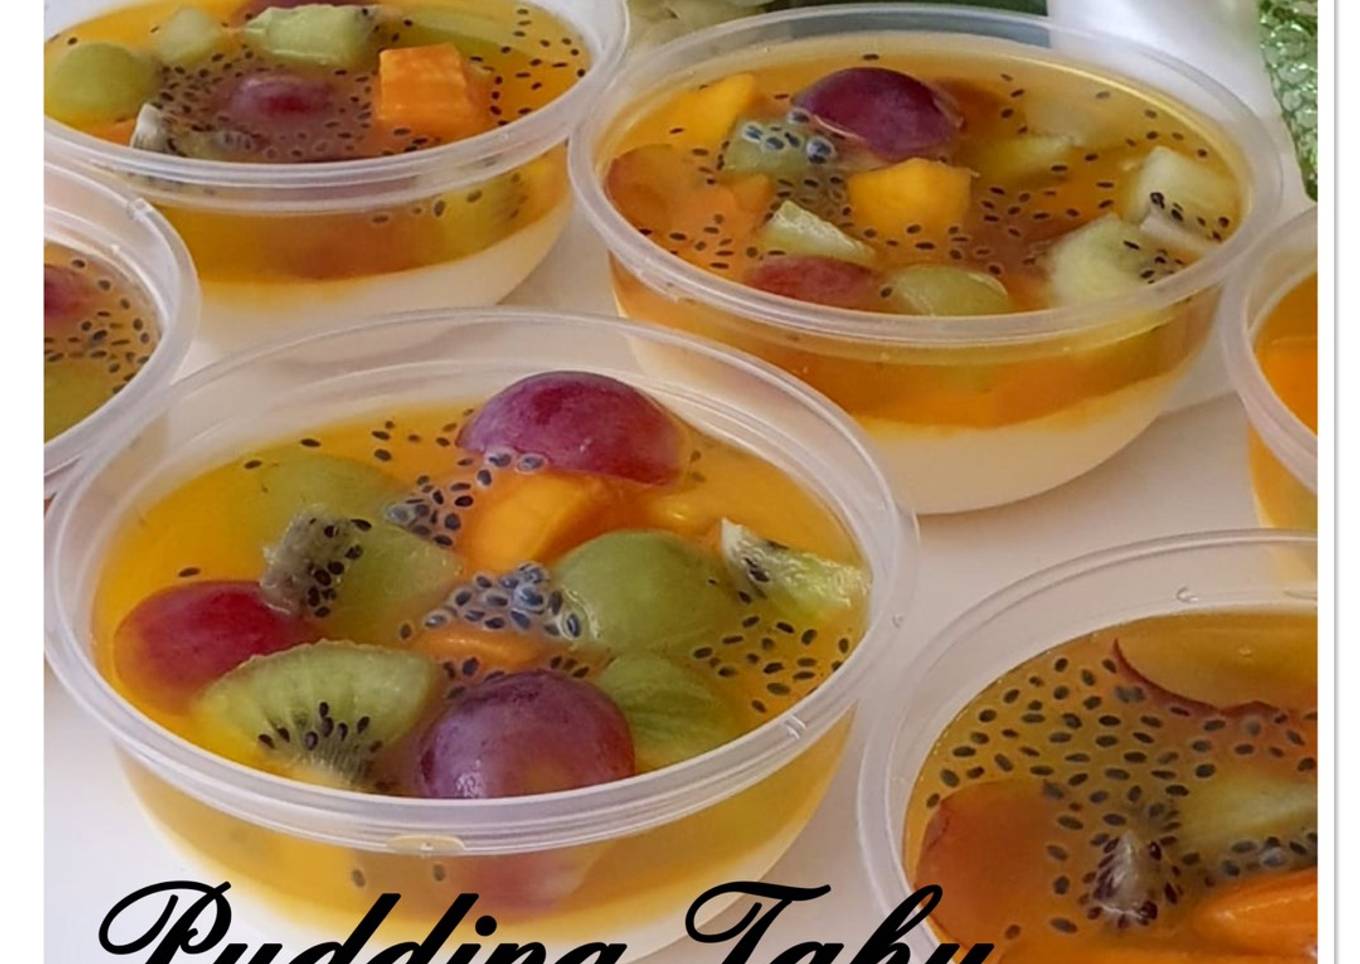 Pudding Tahu